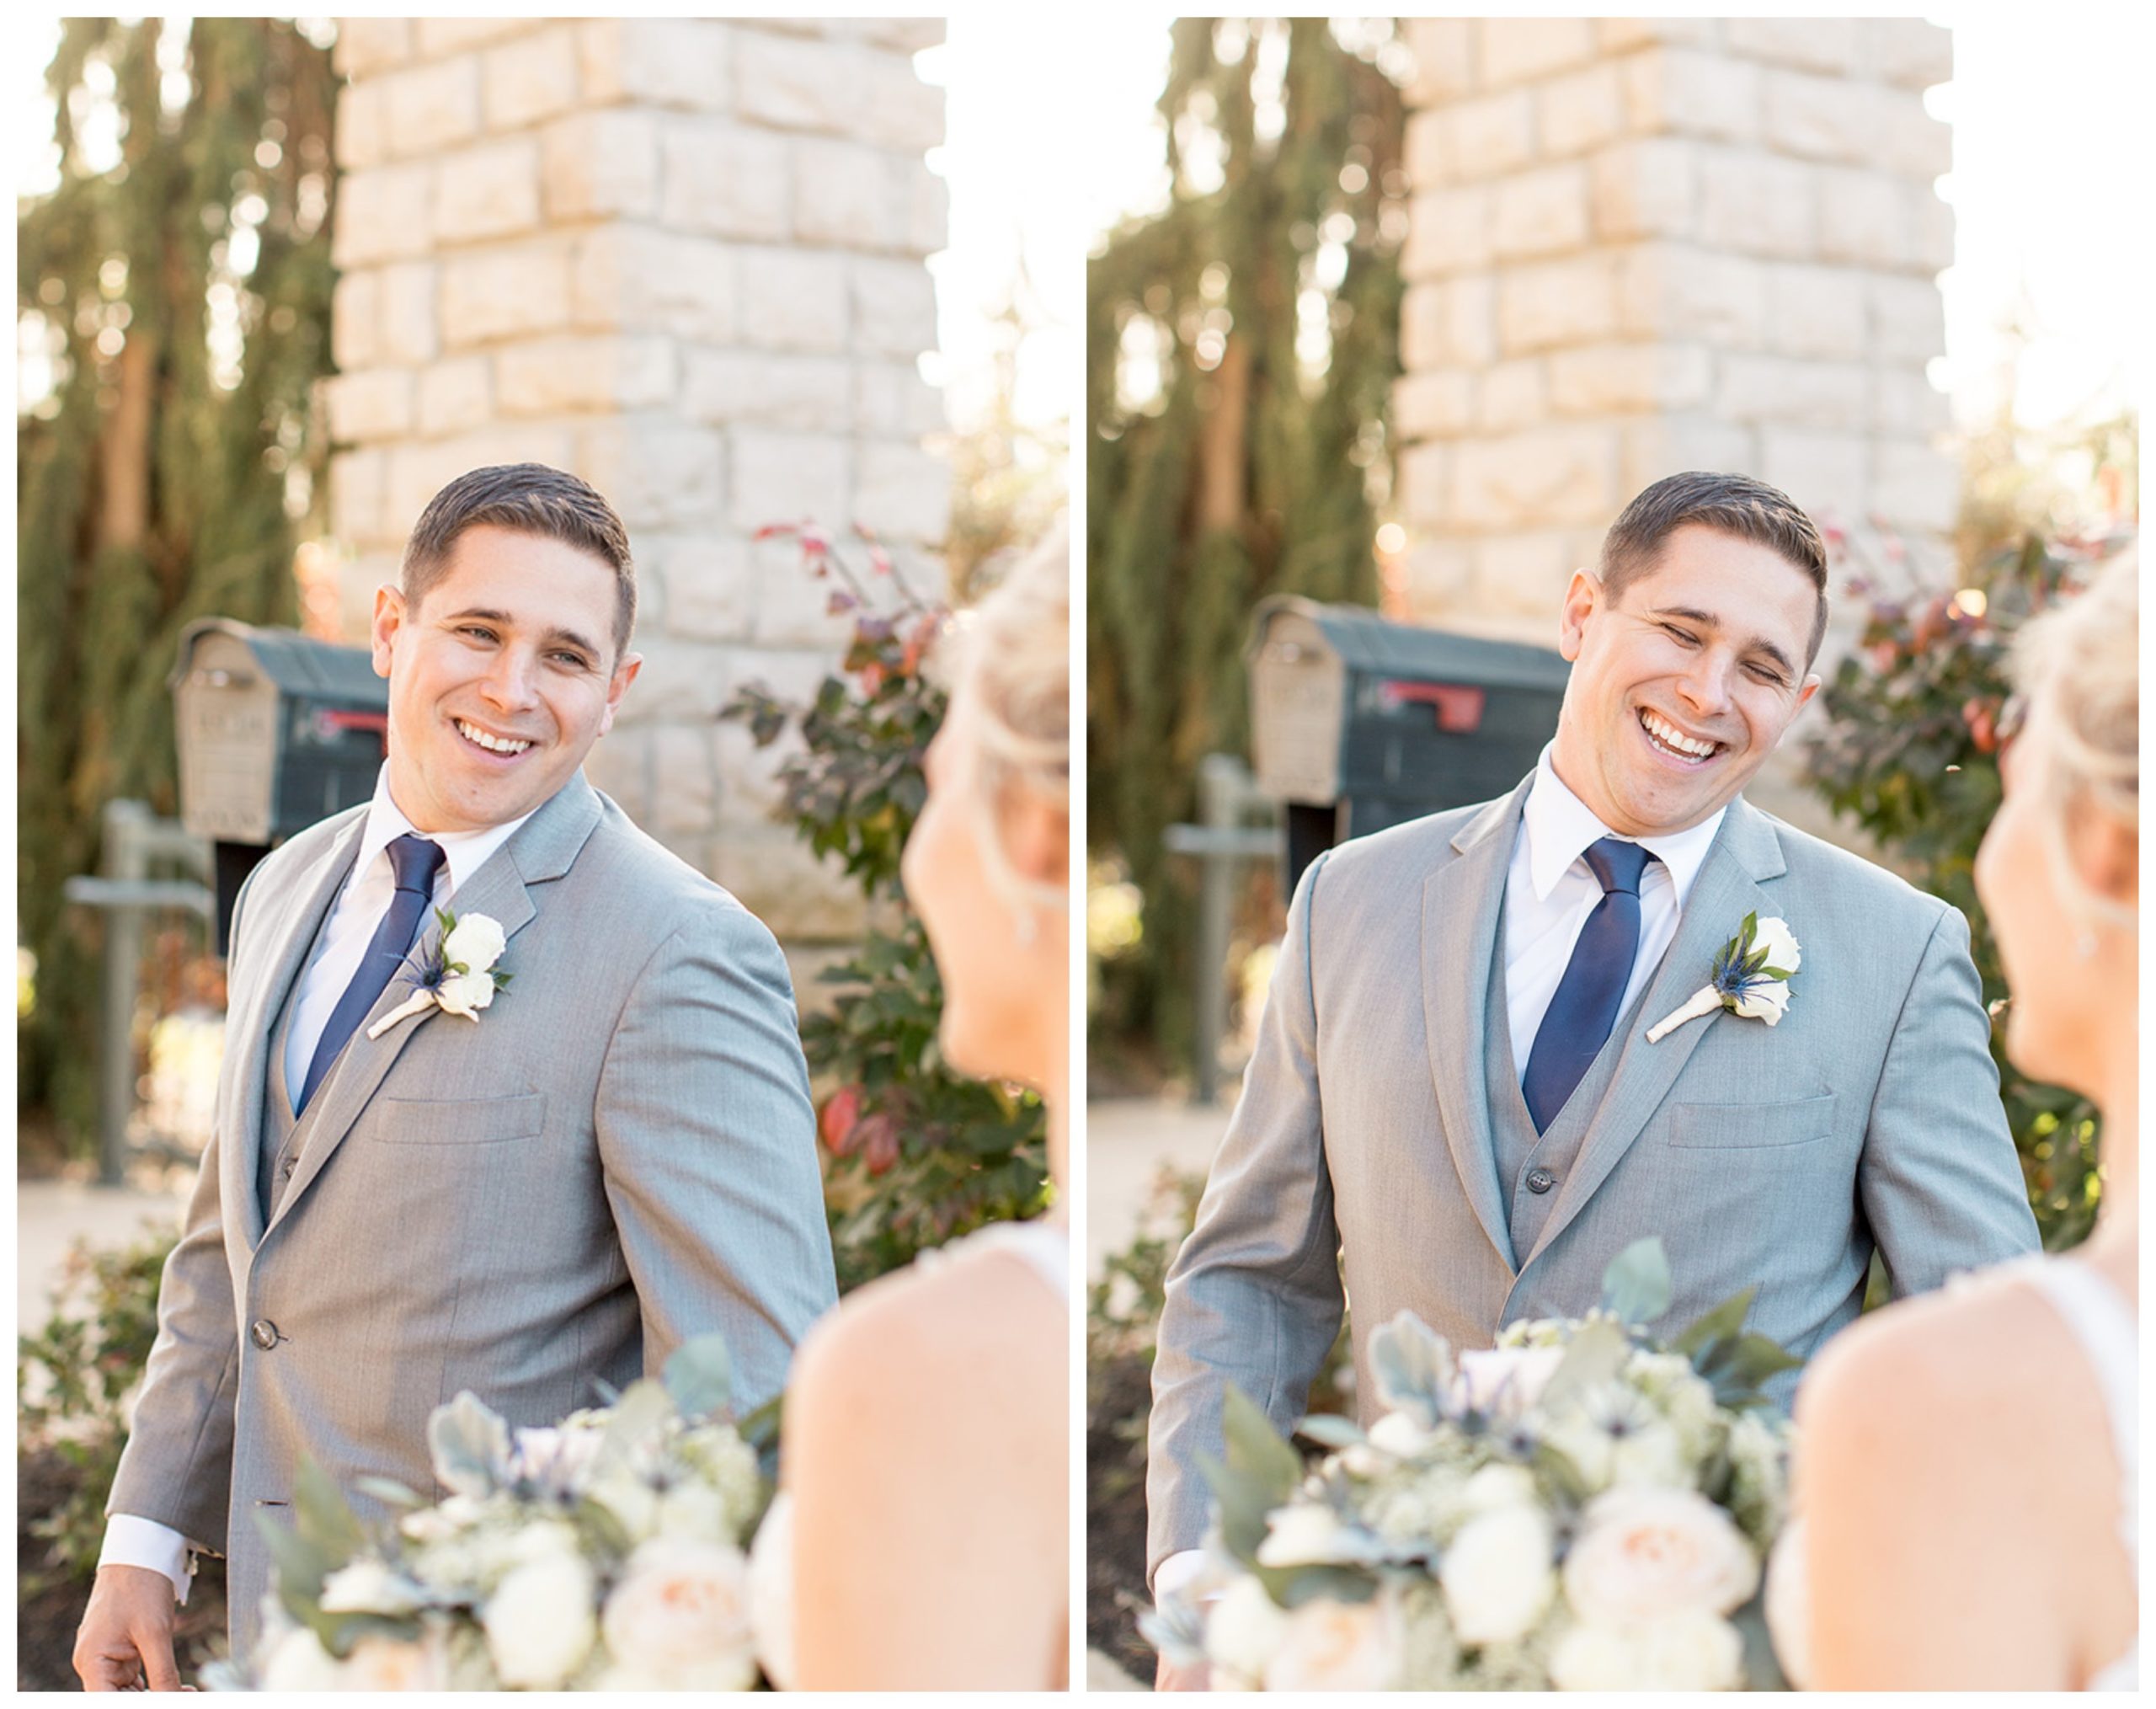 groom's first look reaction